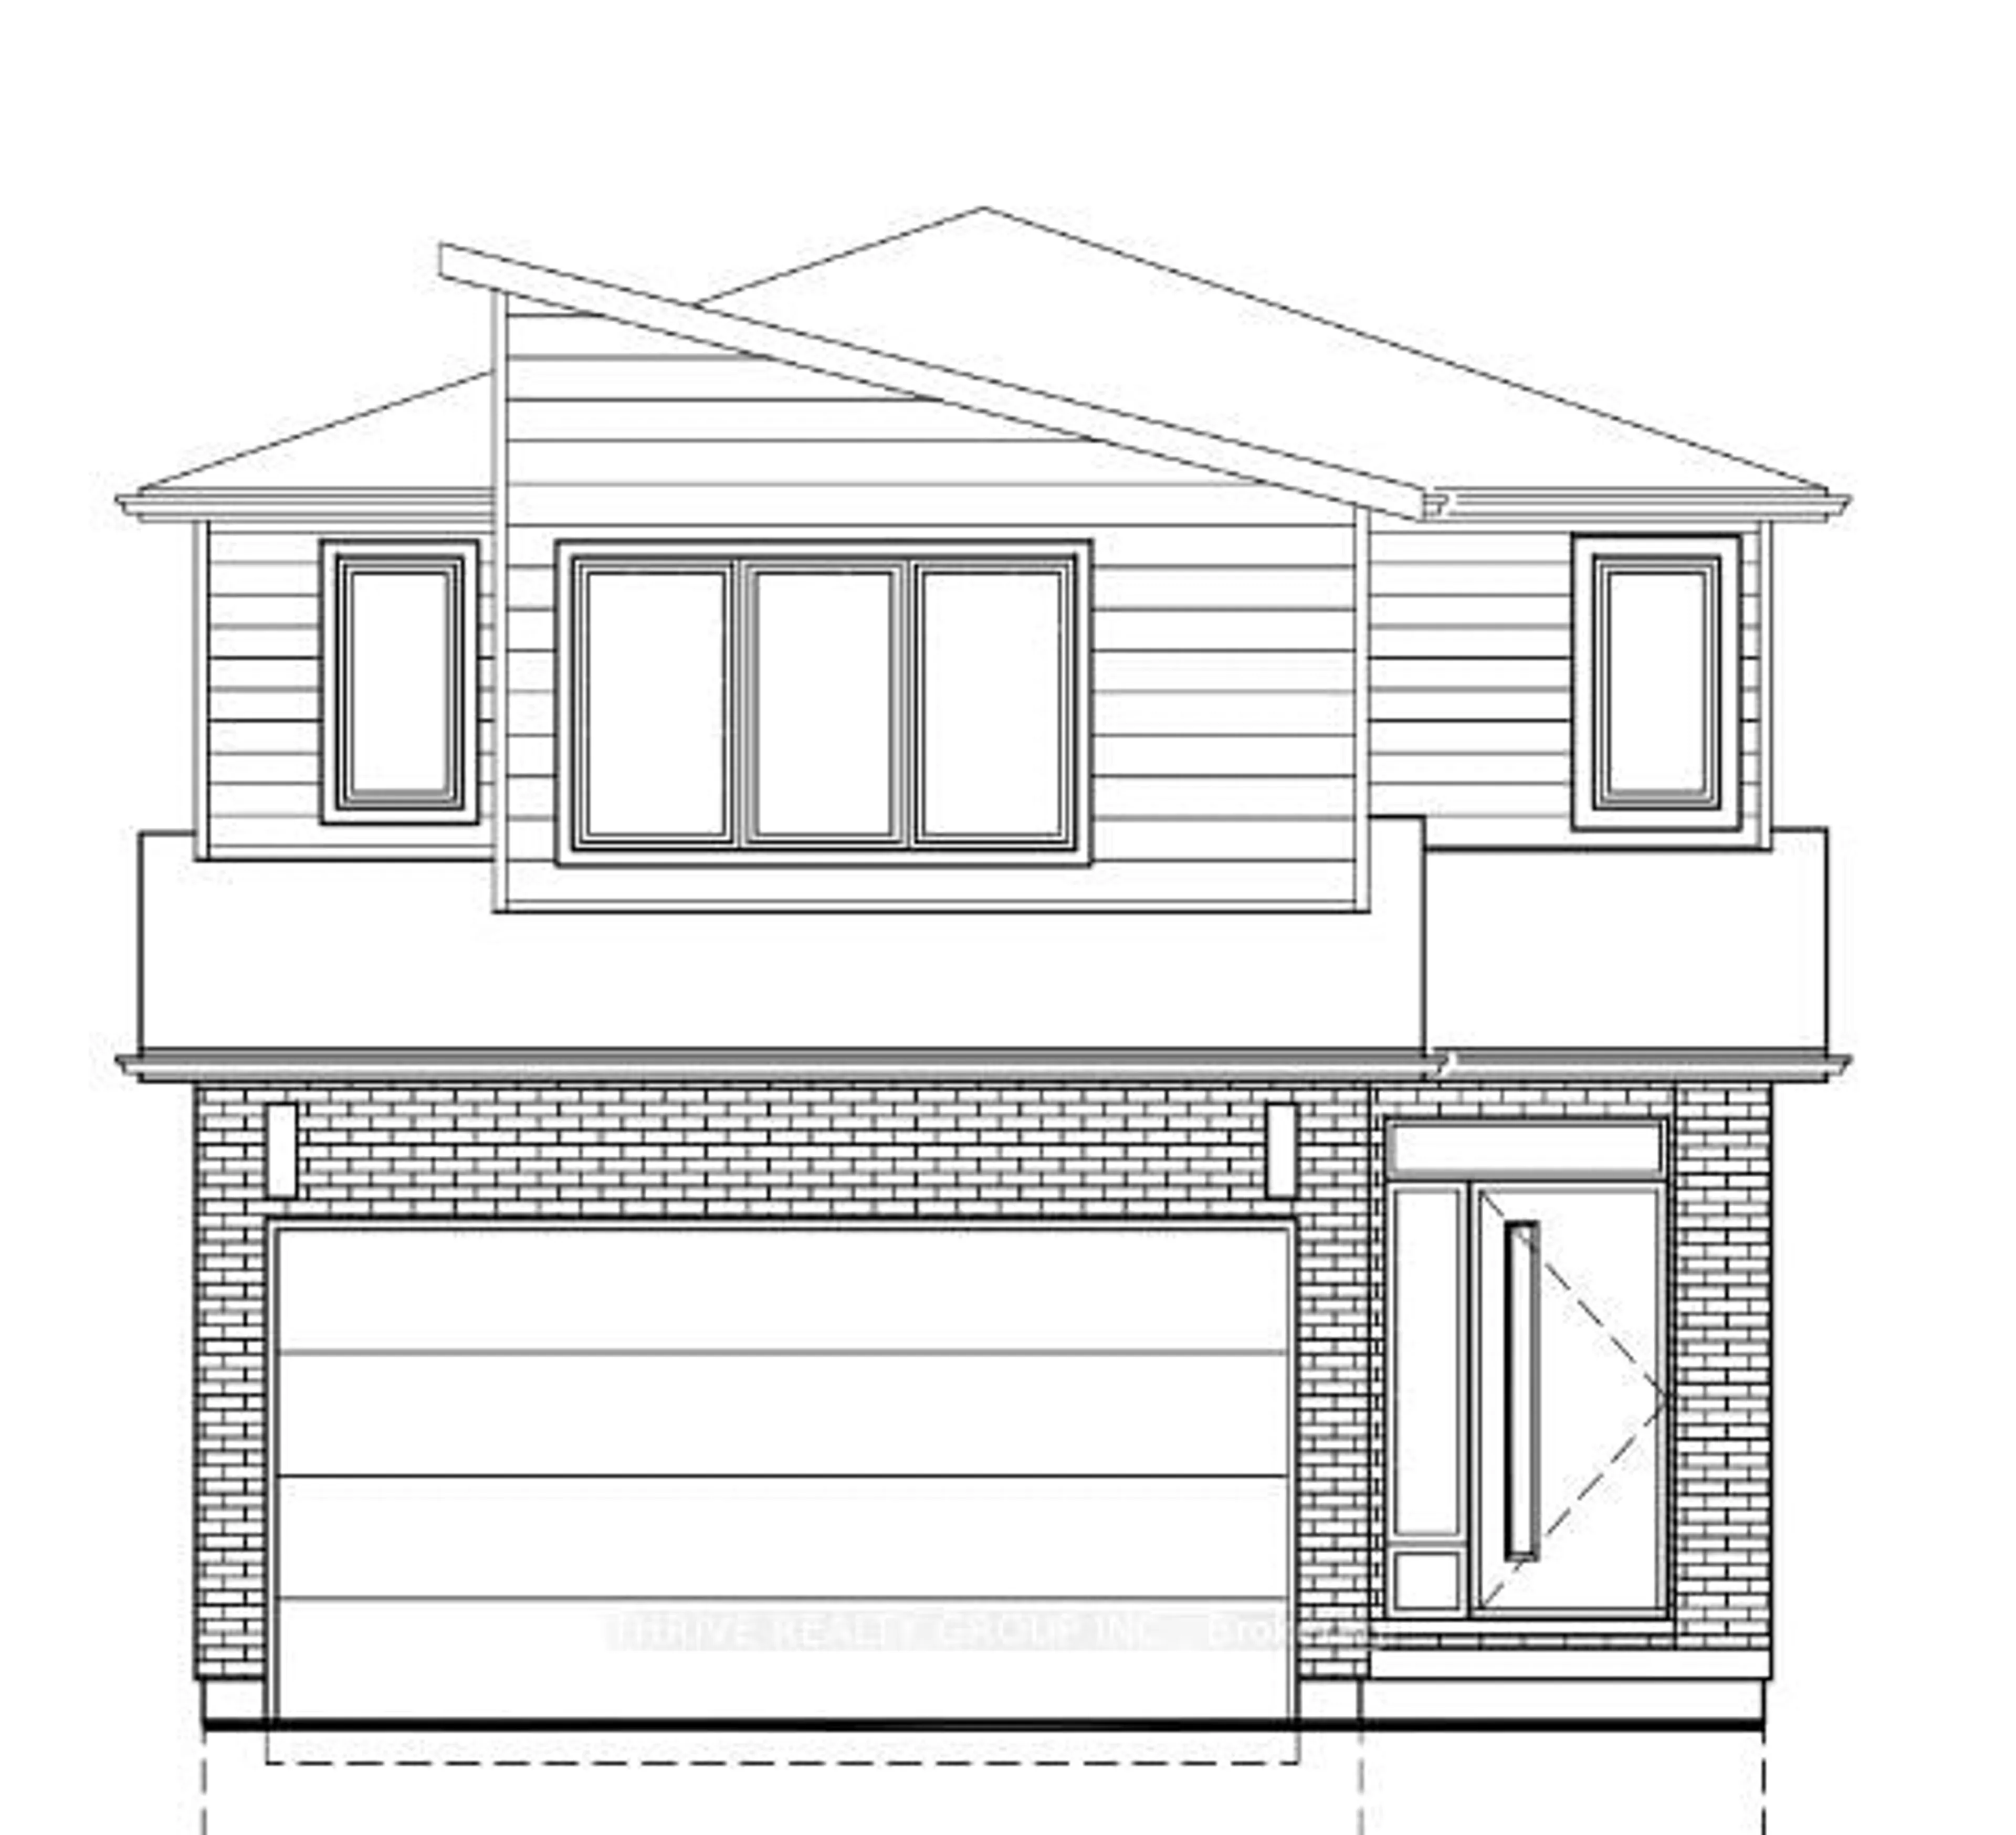 Frontside or backside of a home for 2346 Jordan Blvd, London Ontario N6G 3R5